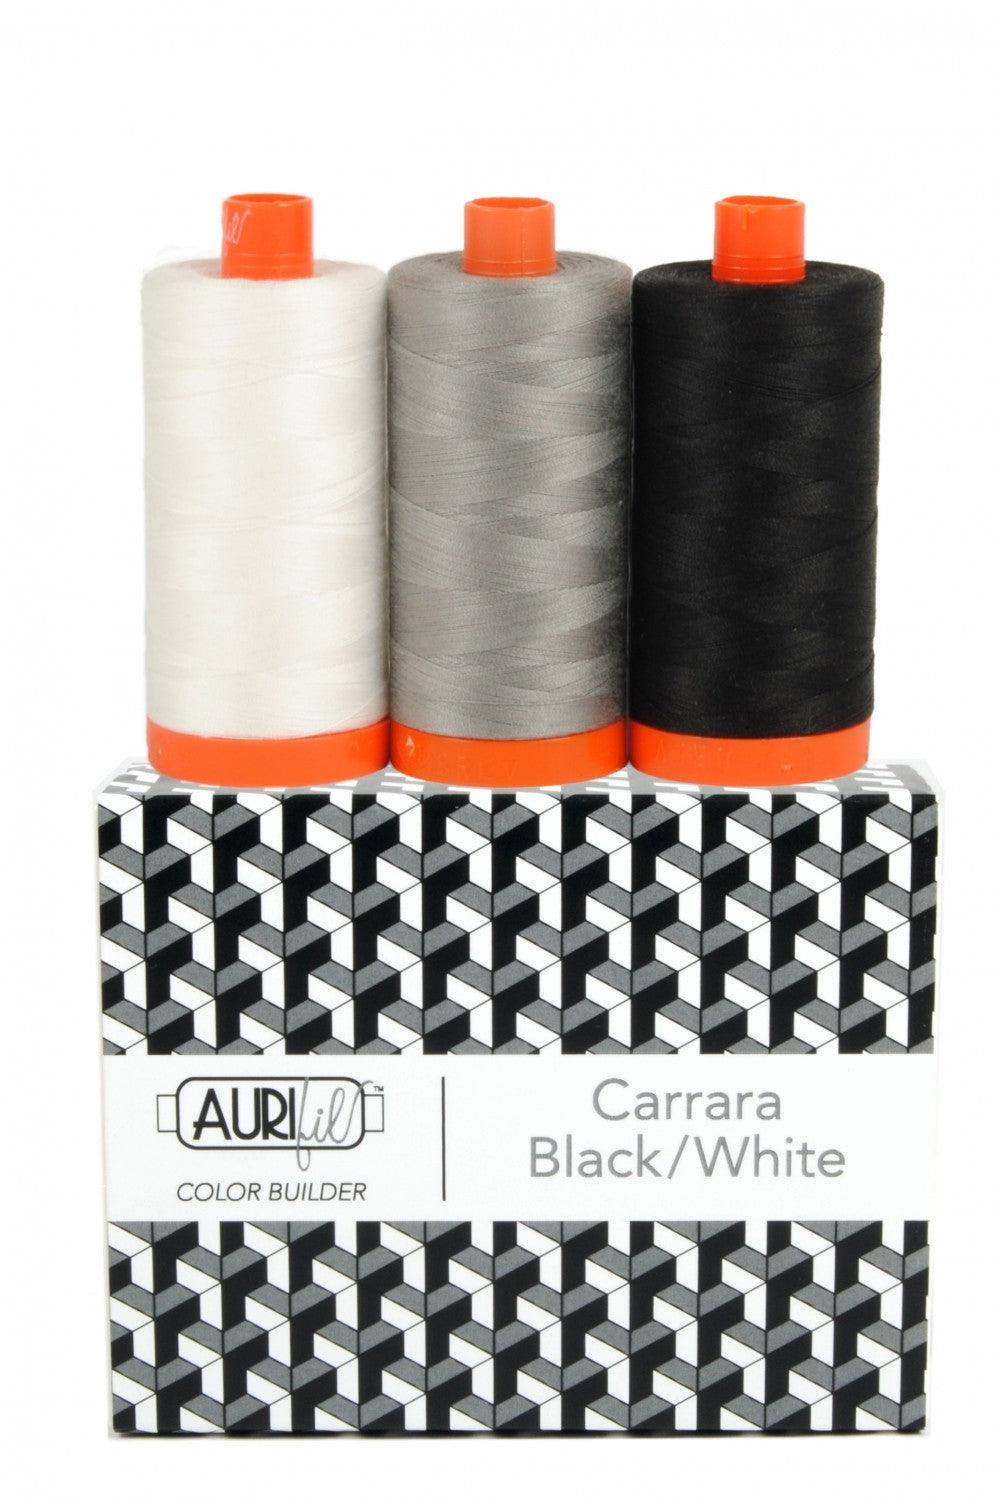 Carrara Black / White, Color Builder, Aurifil, 1300m, Package of 3 - Kawartha Quilting and Sewing LTD.